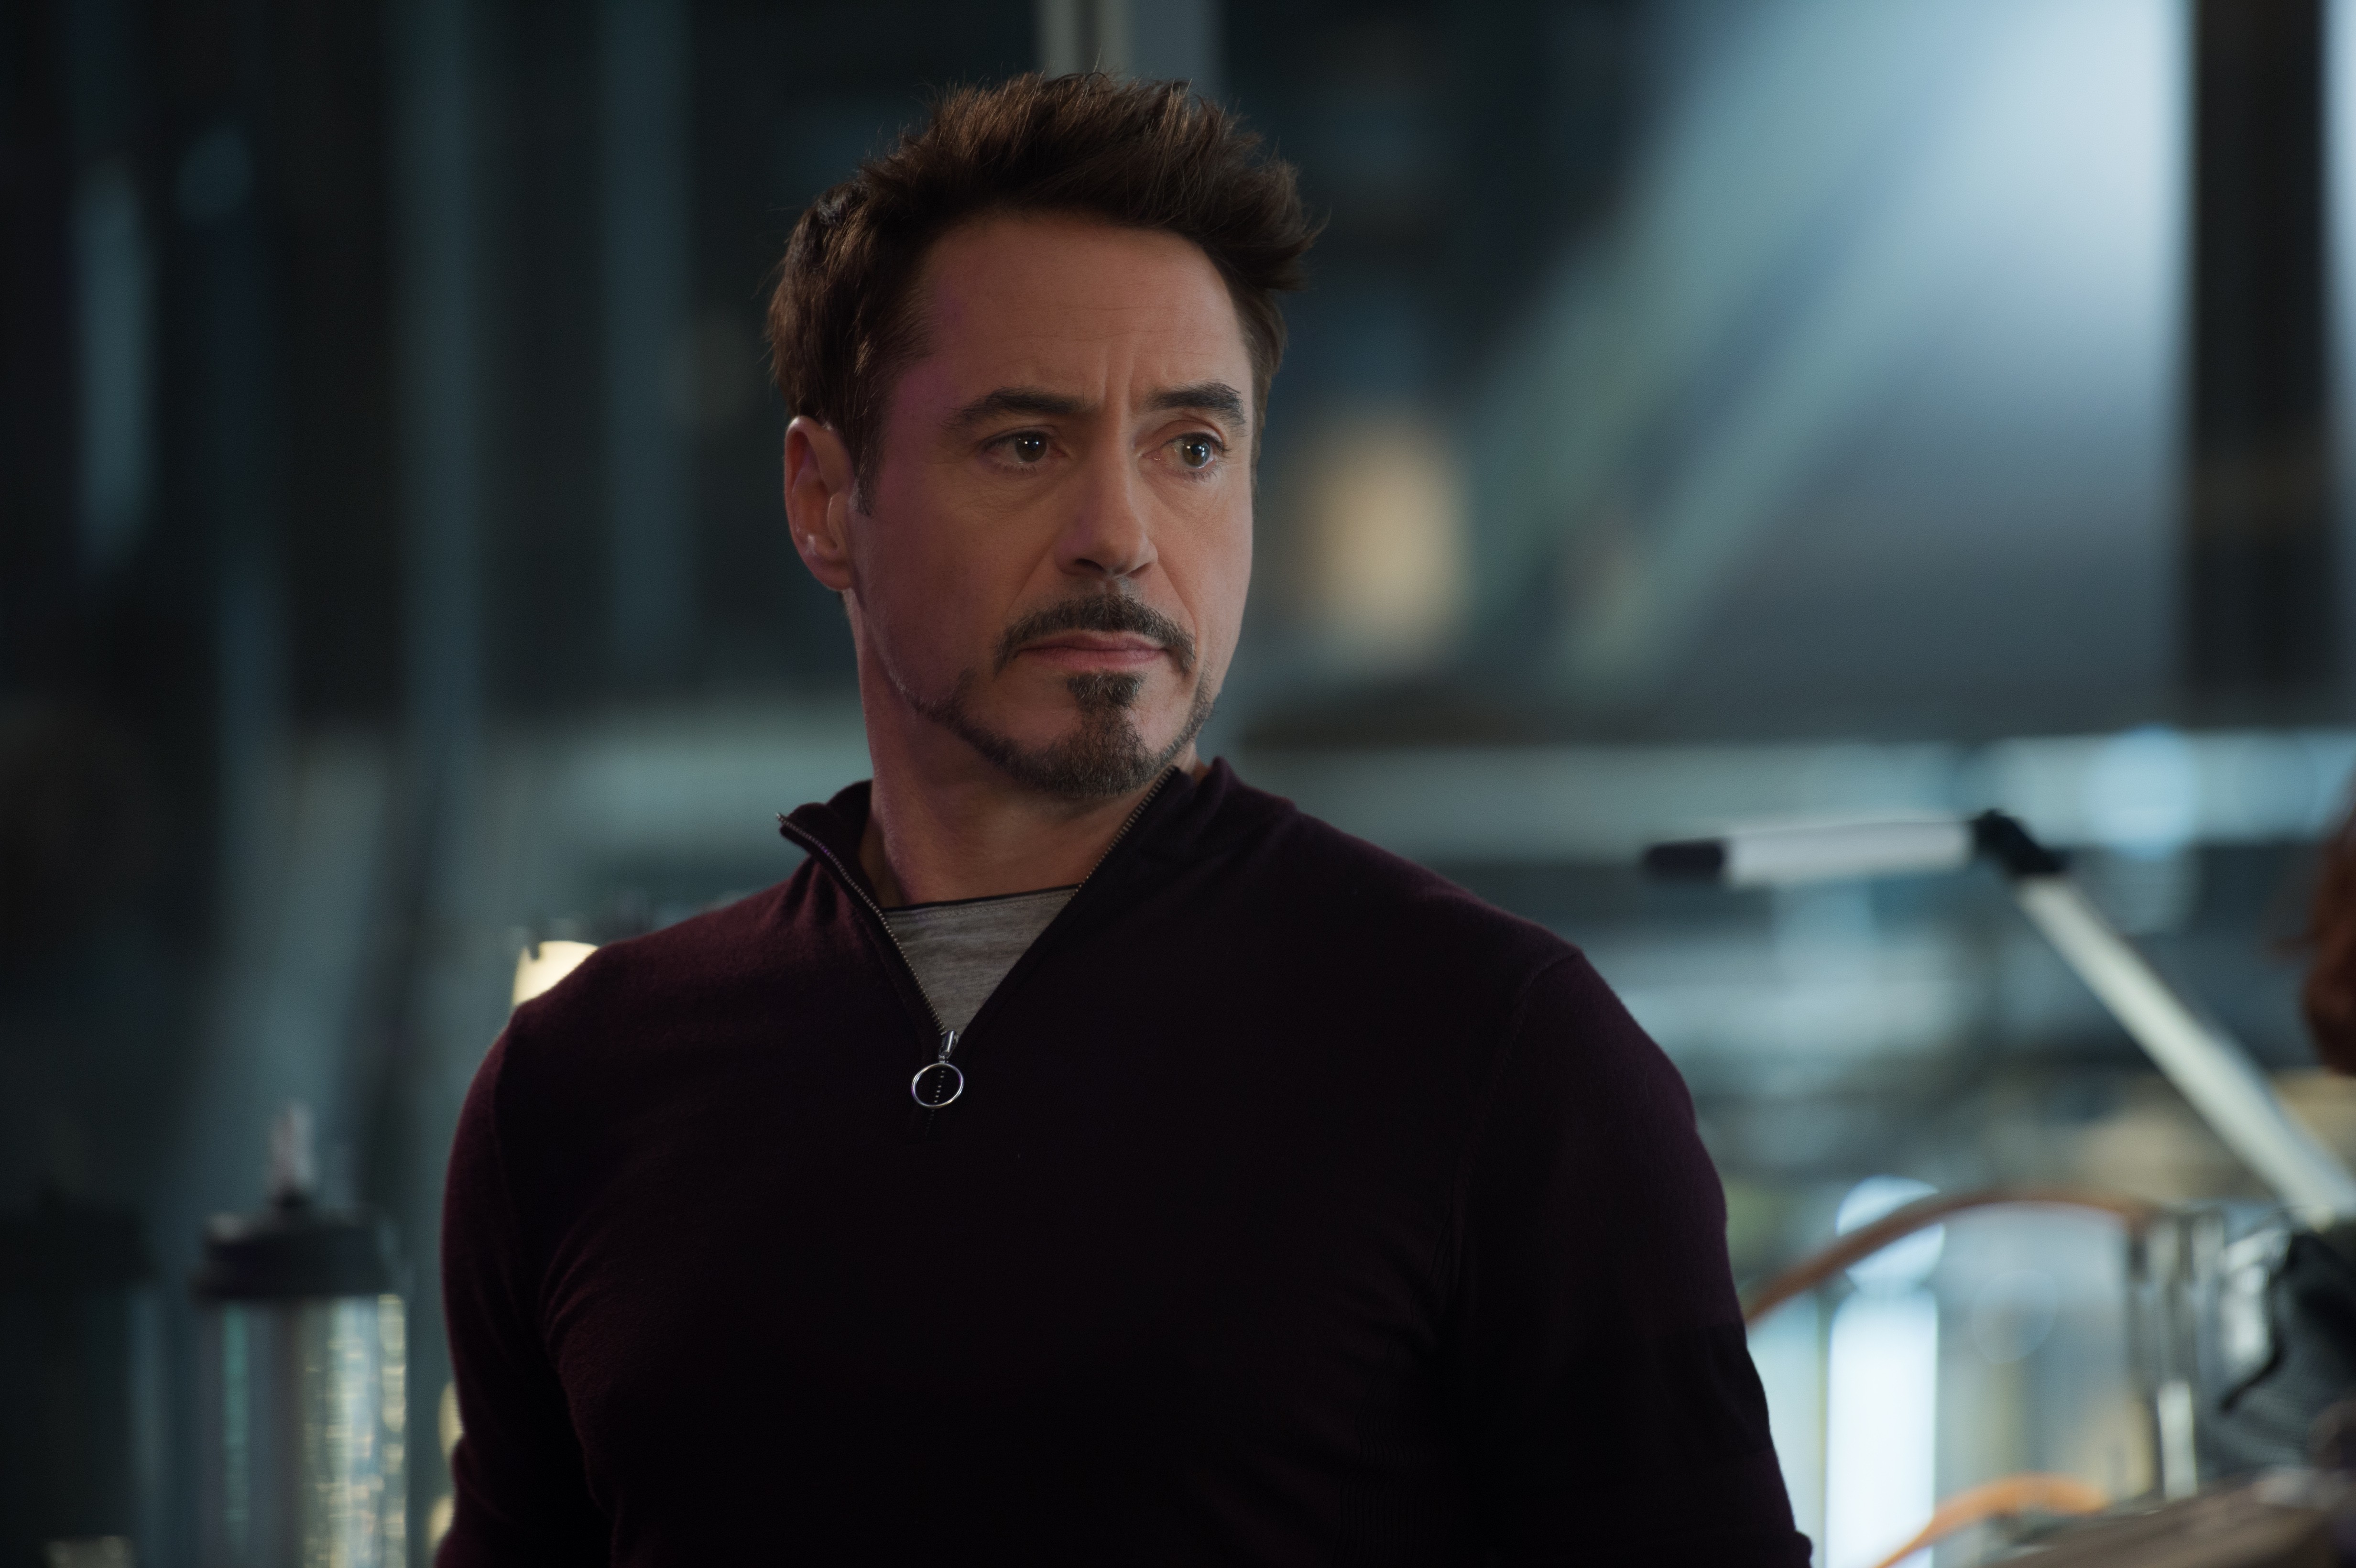 People 4928x3280 Avengers: Age of Ultron The Avengers Tony Stark Robert Downey Jr. Marvel Cinematic Universe hero beard men actor film stills movies